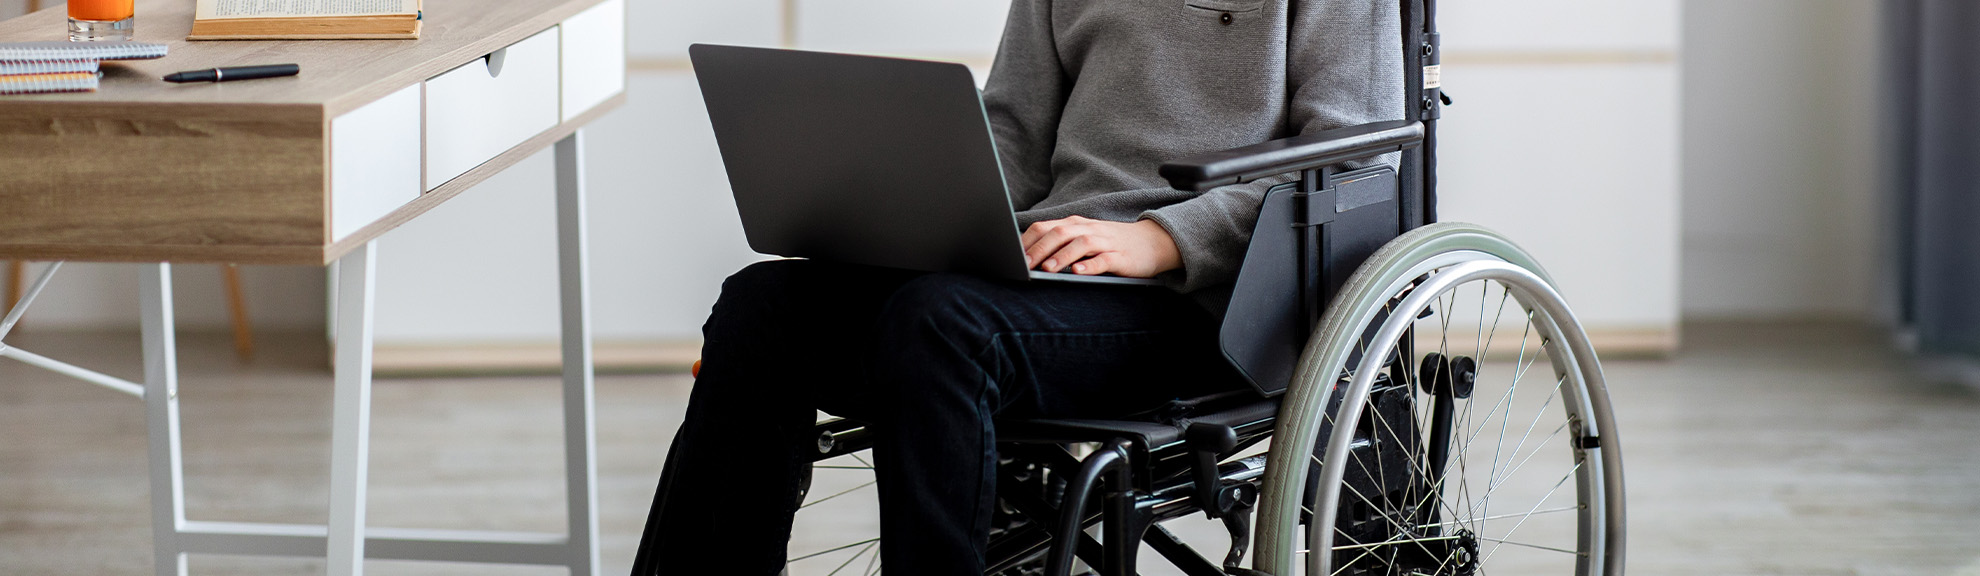 Disabled teen boy in wheelchair doing online homework on laptop indoors